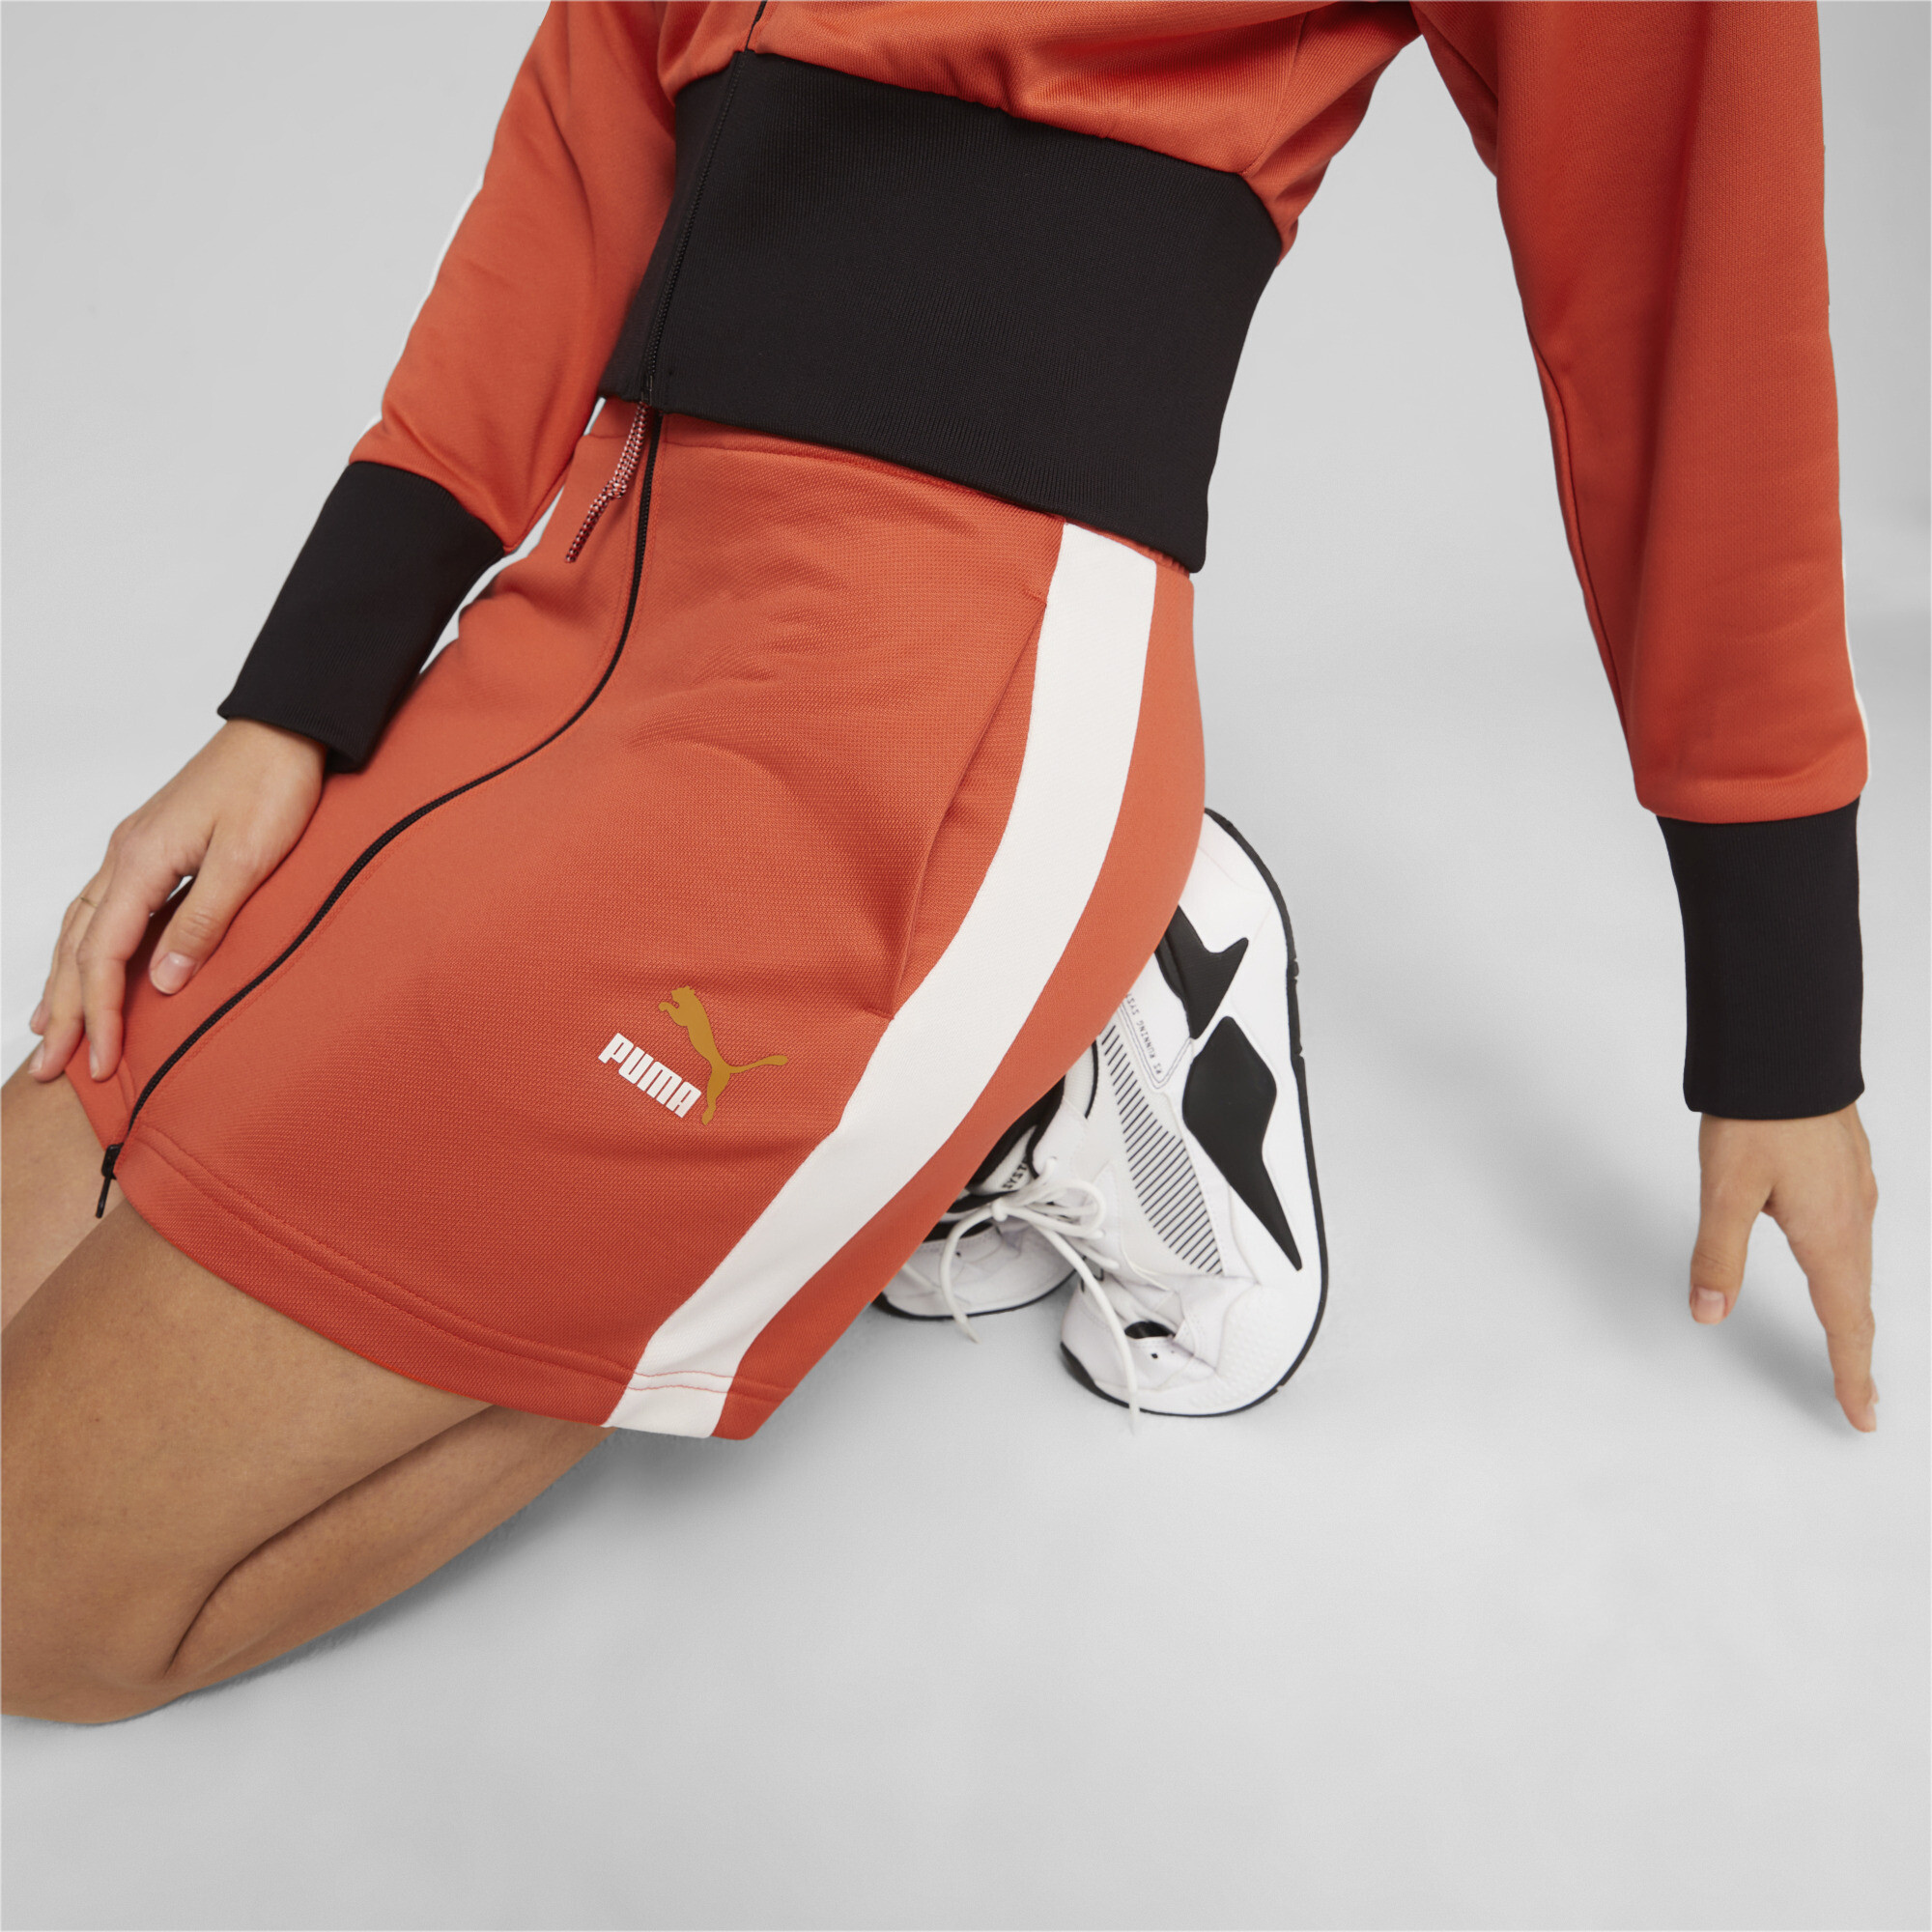 Women's PUMA T7 Forward History Skirt In Orange, Size Small